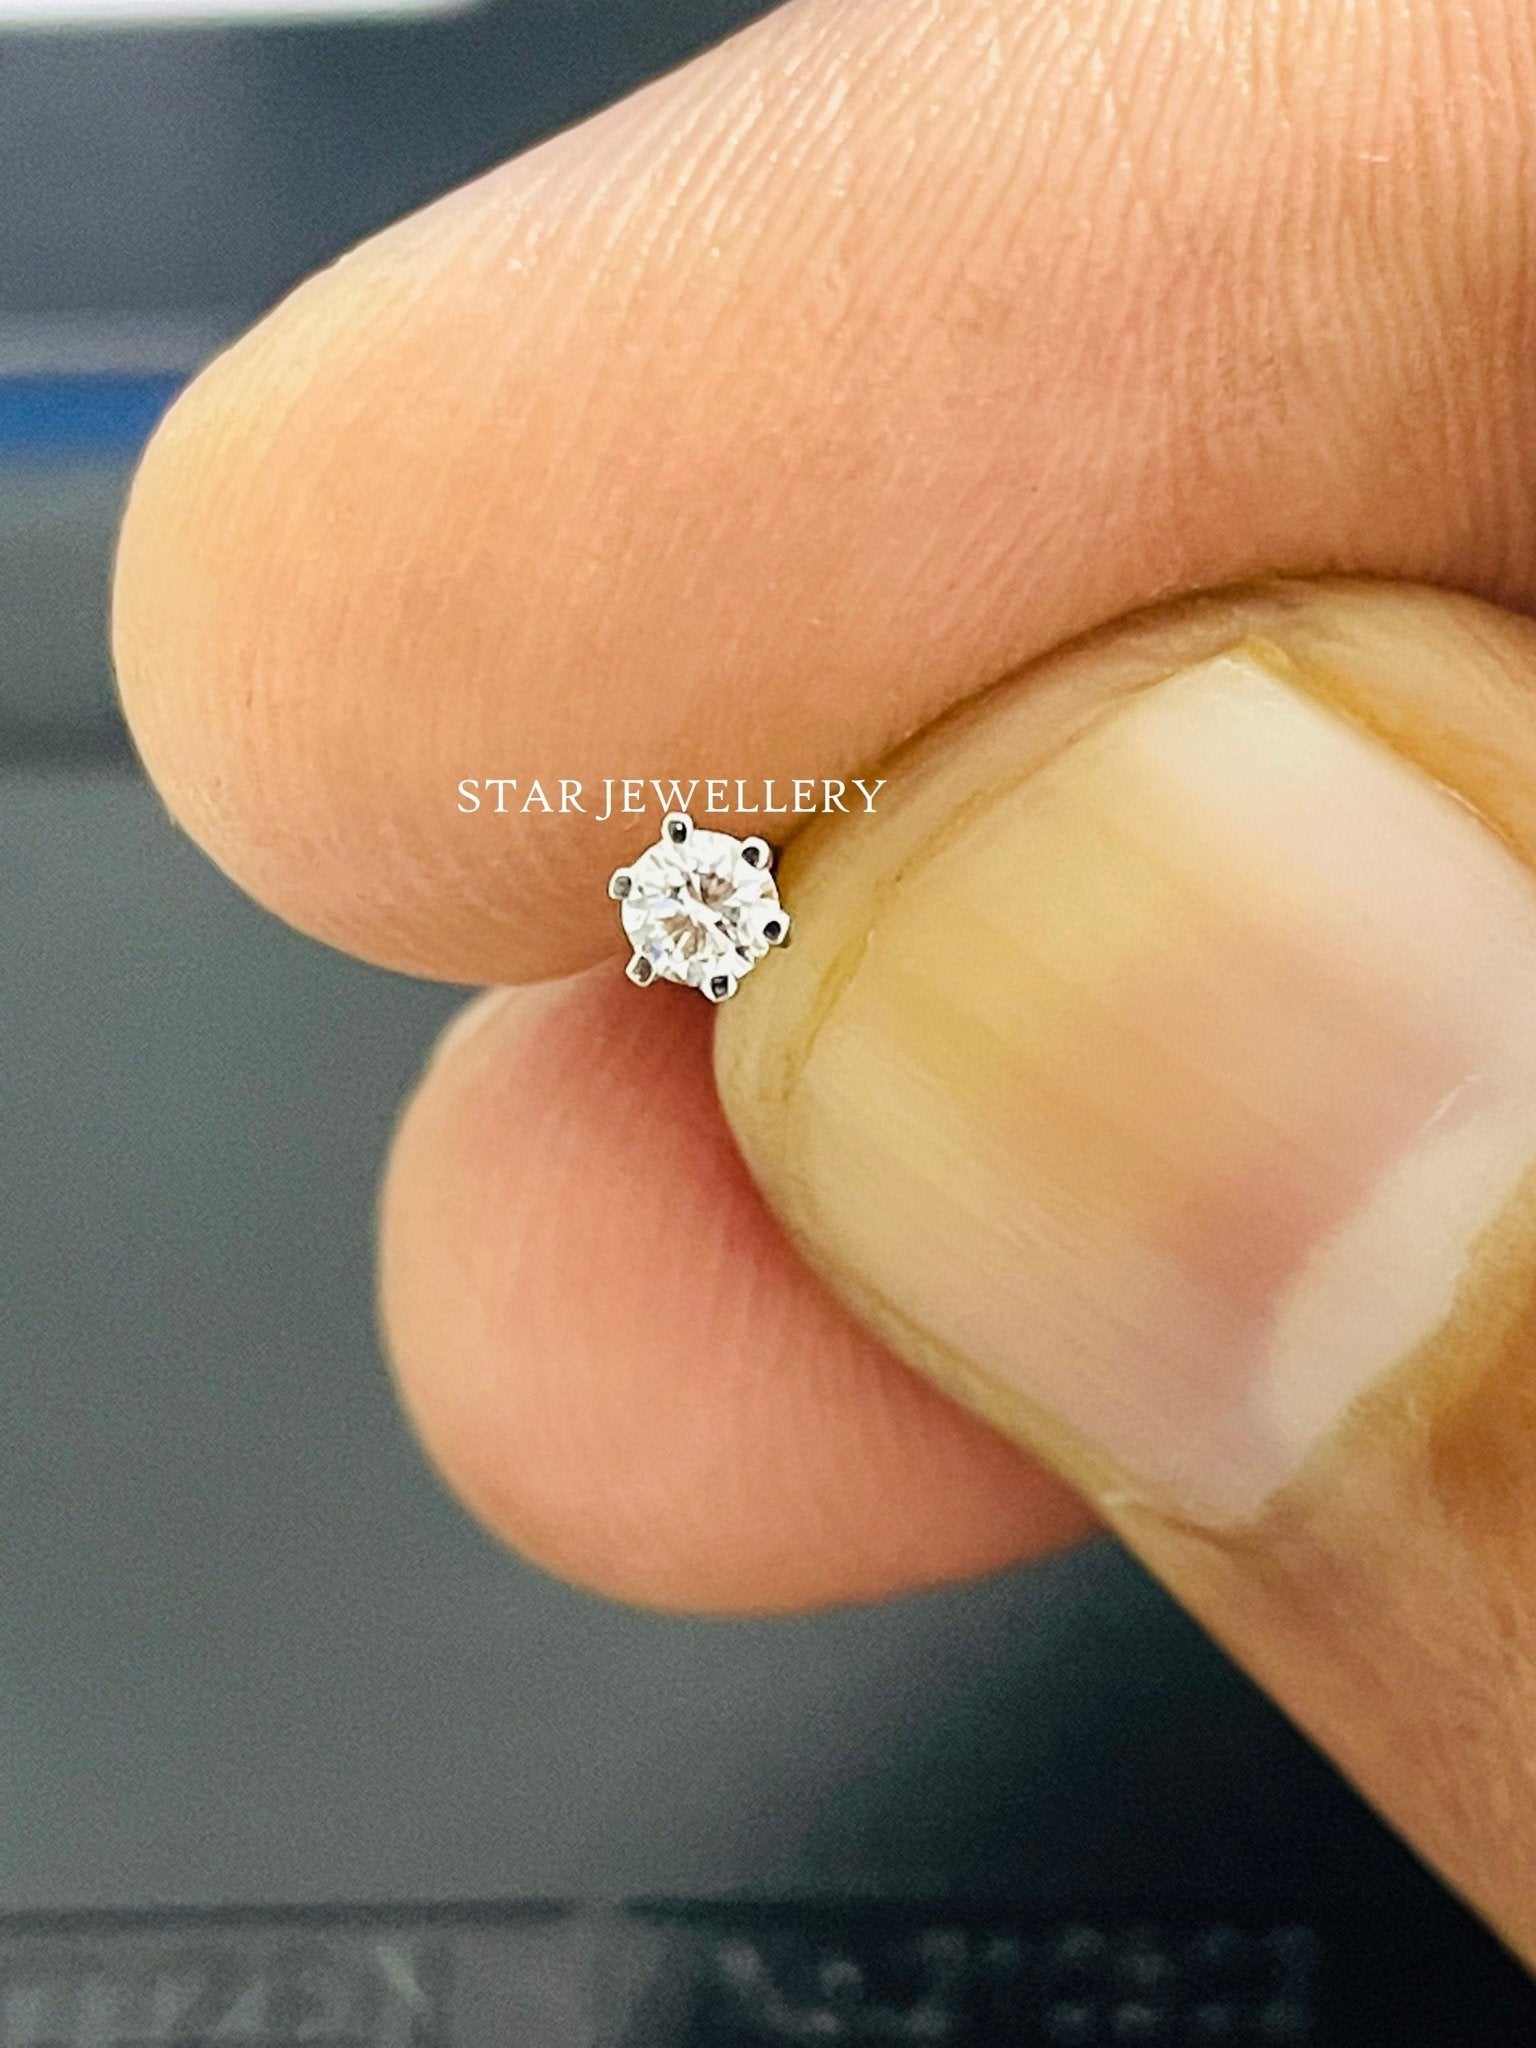 0.10 Ct Diamond Ear Stud Piercing - STAR JEWELRY